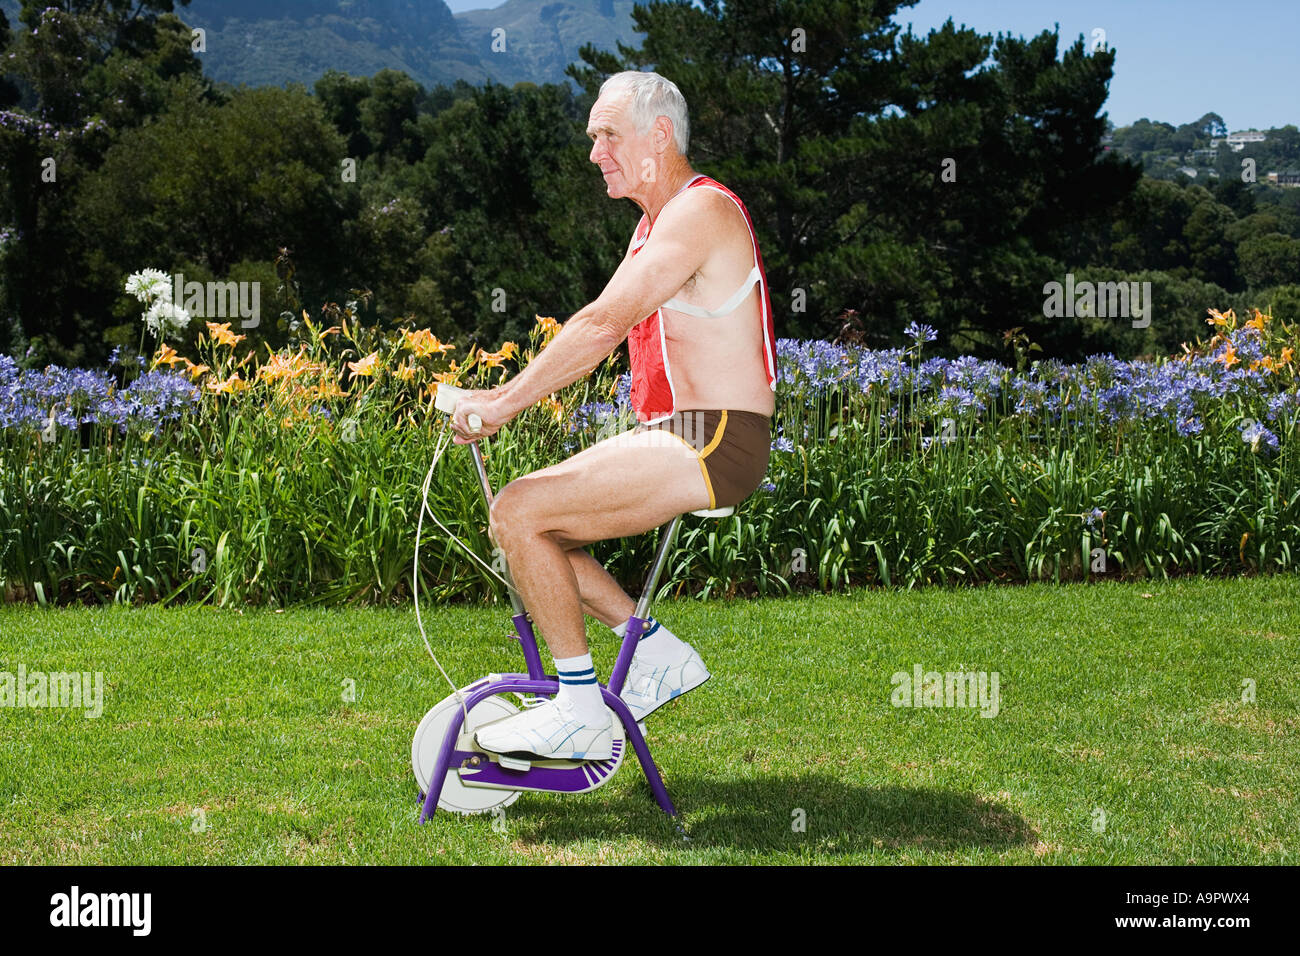 Senior adult man riding exercise bike Stock Photo